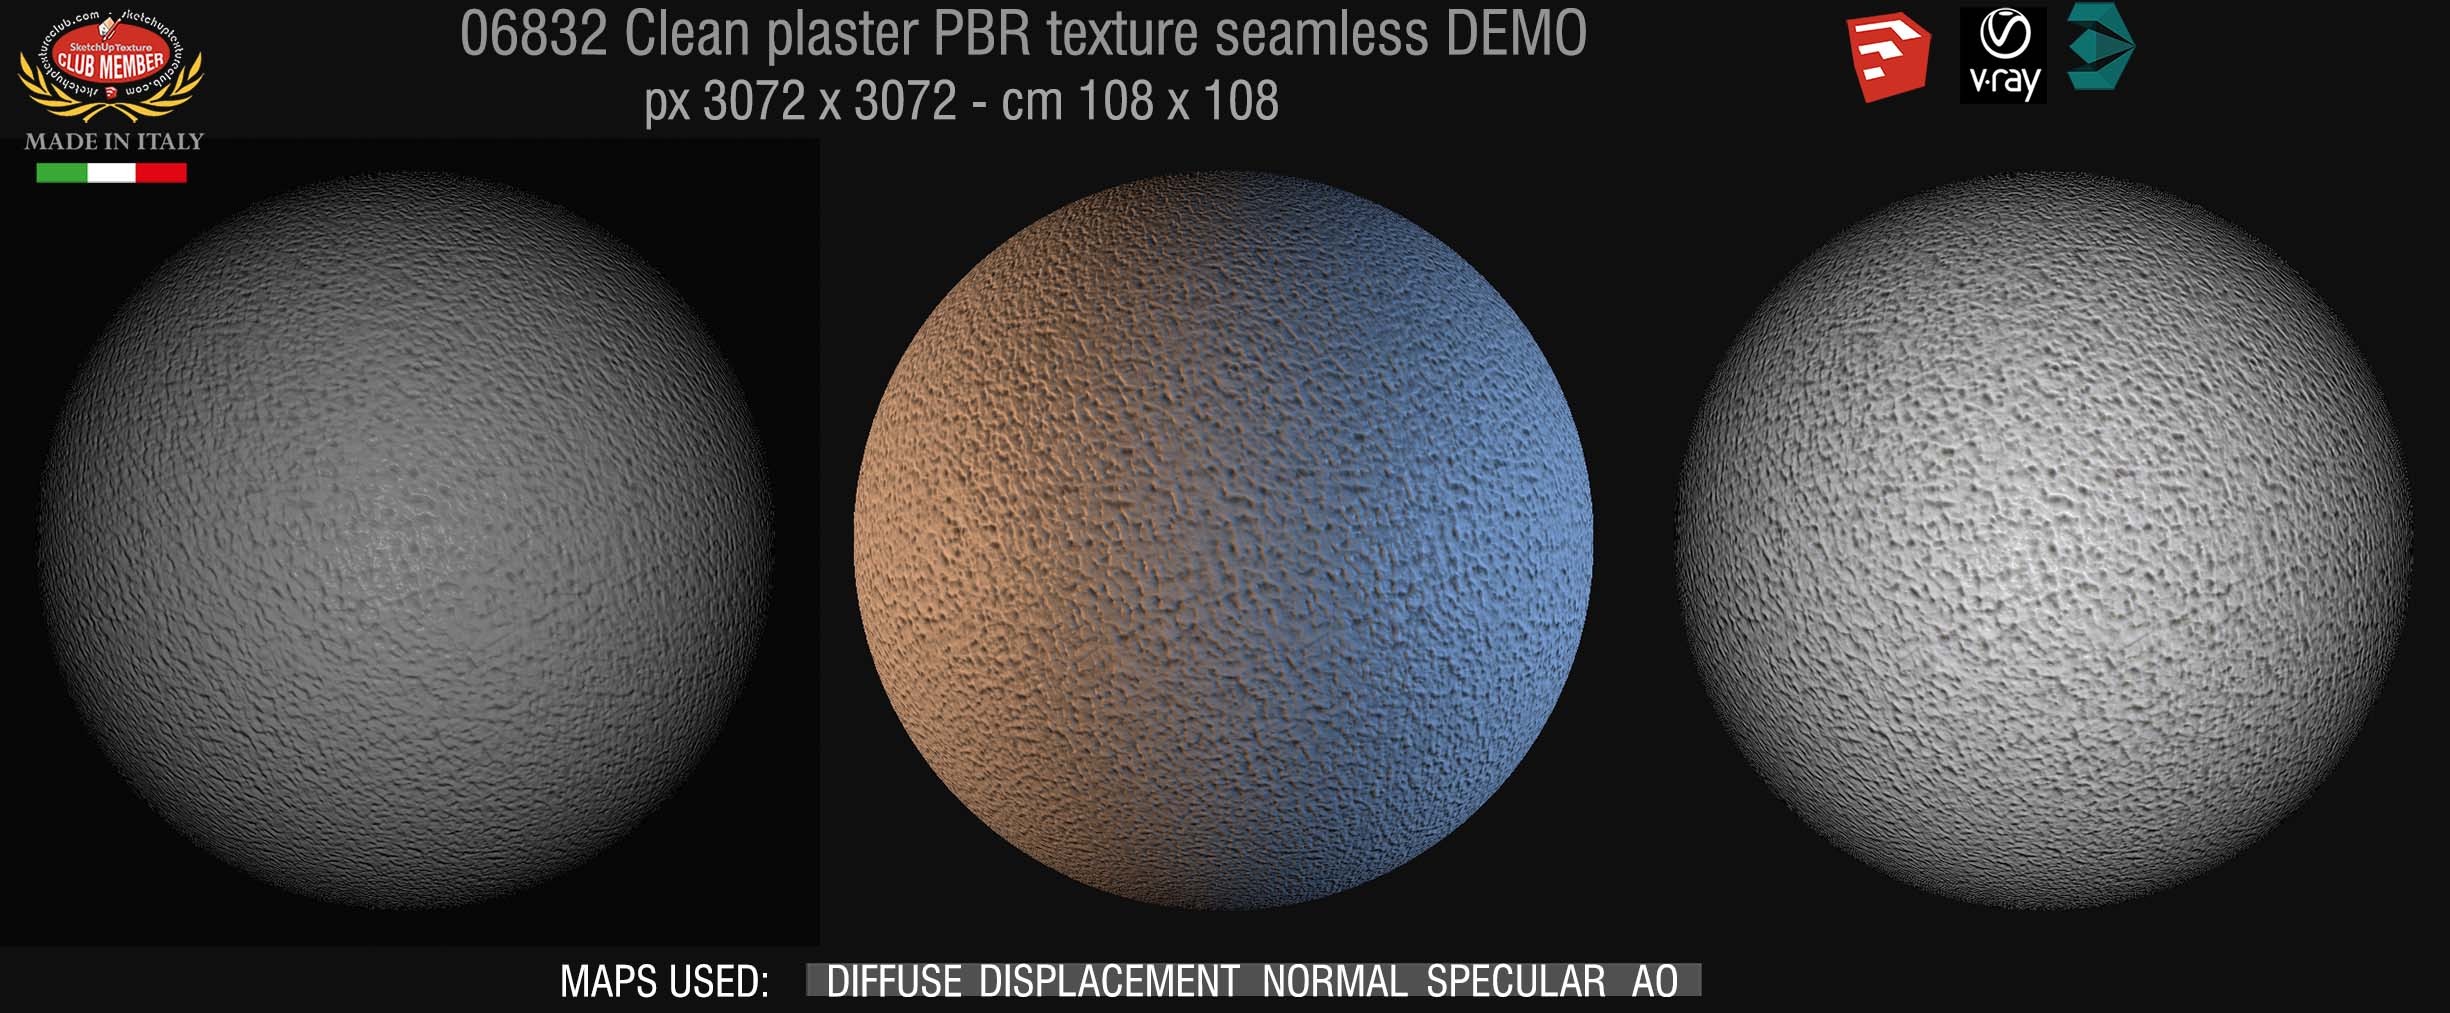 06832 clean plaster PBR texture seamless DEMO